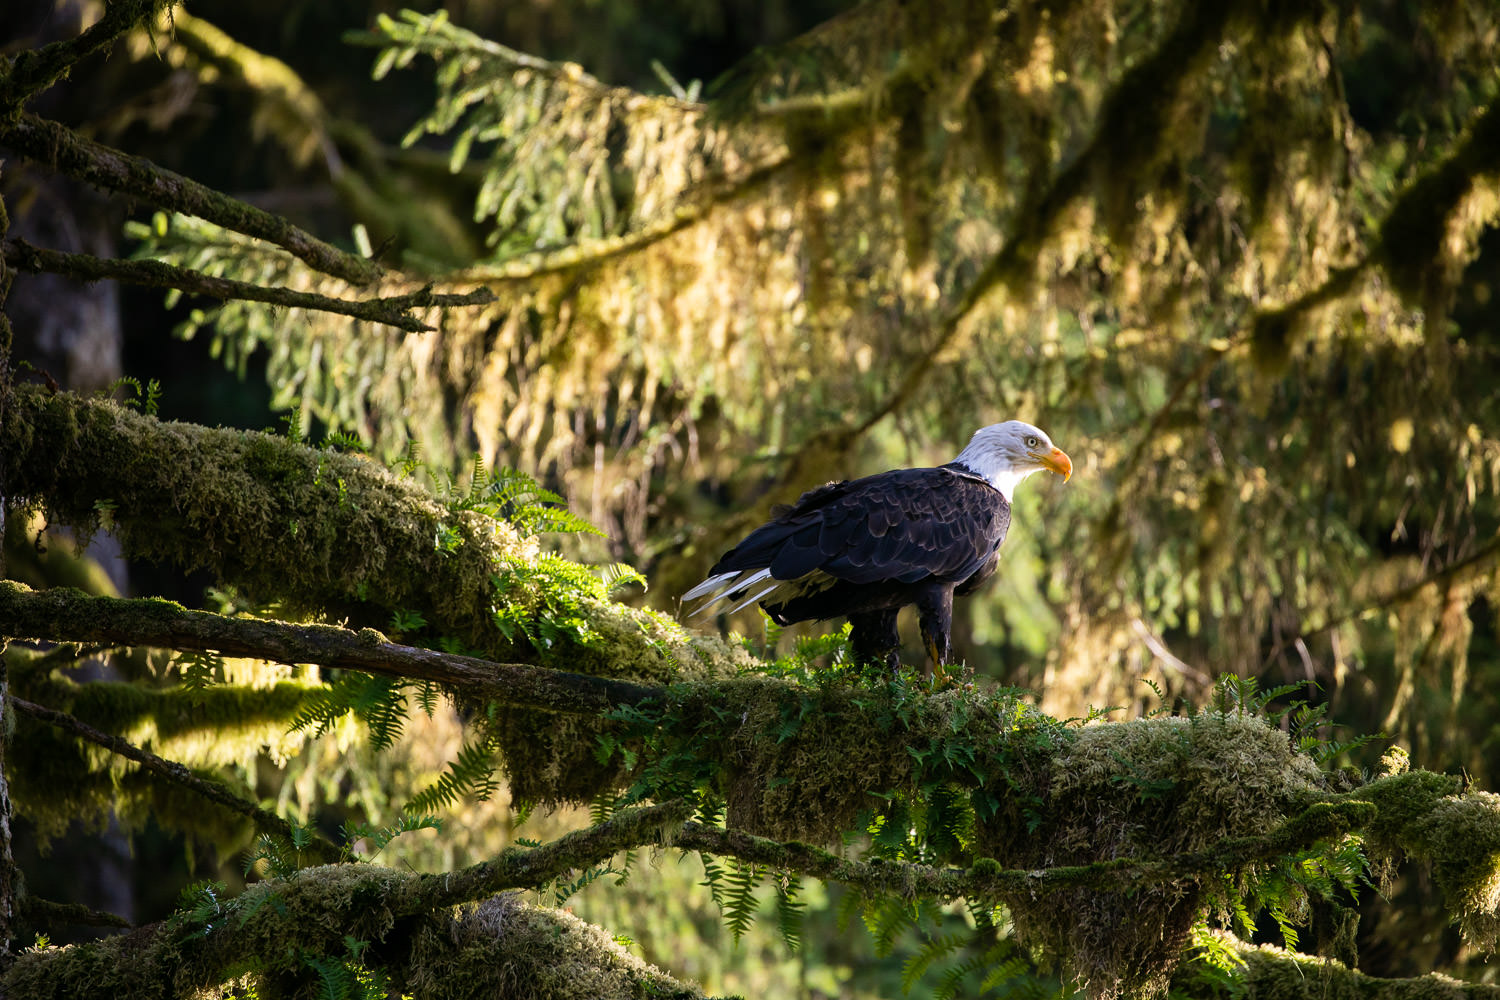 blad-eagle-tree-branch-great-bear-rainforest.jpg